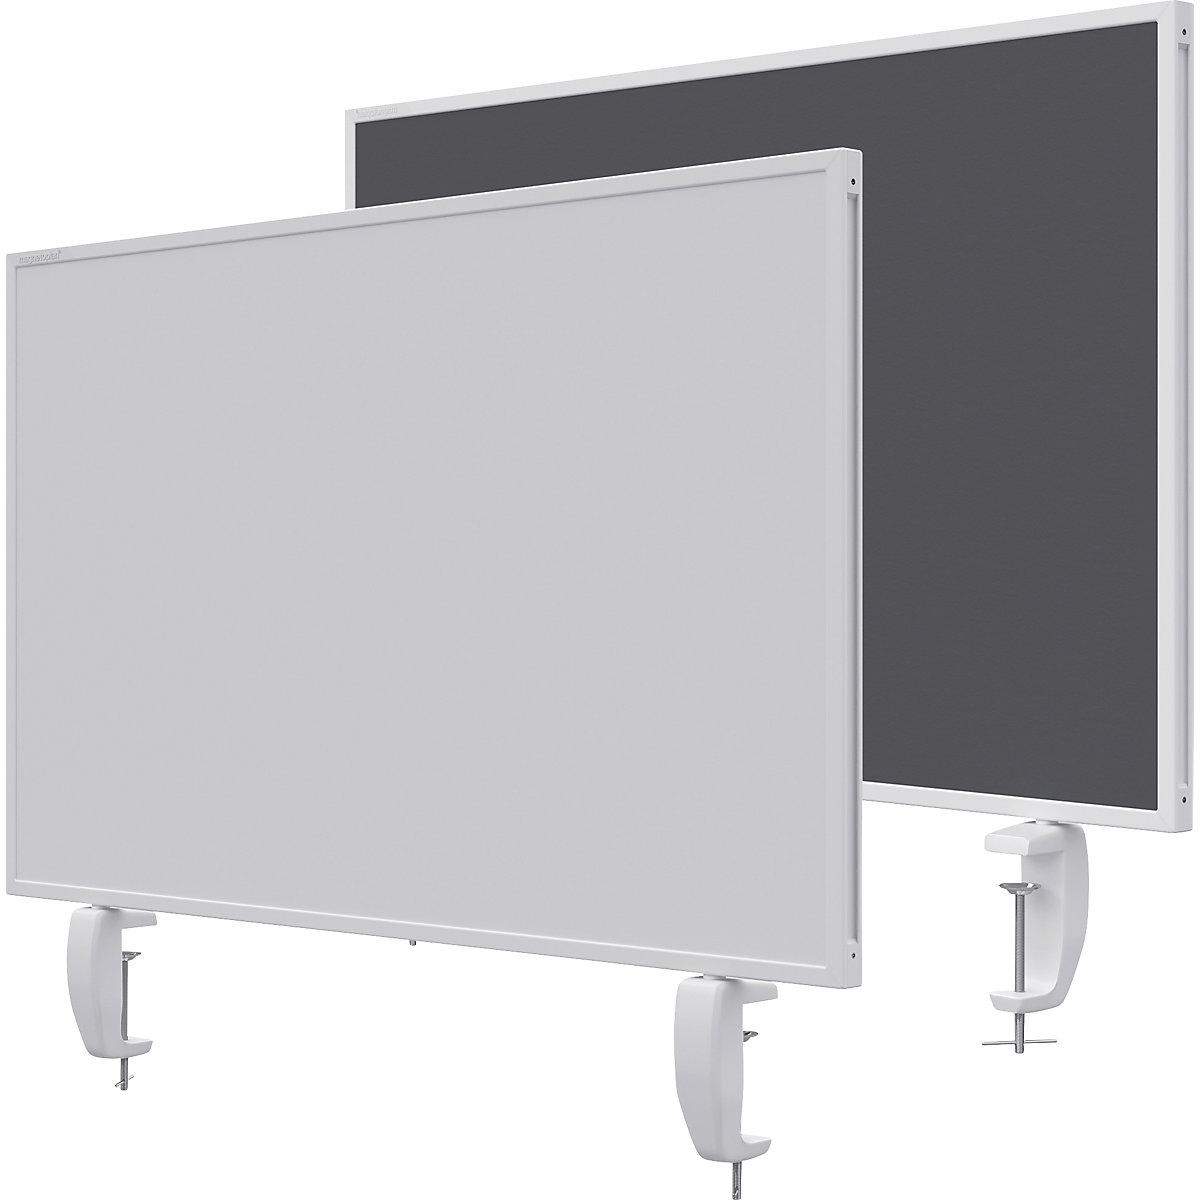 Double-sided organisational surfaces: whiteboard surface/felt surface